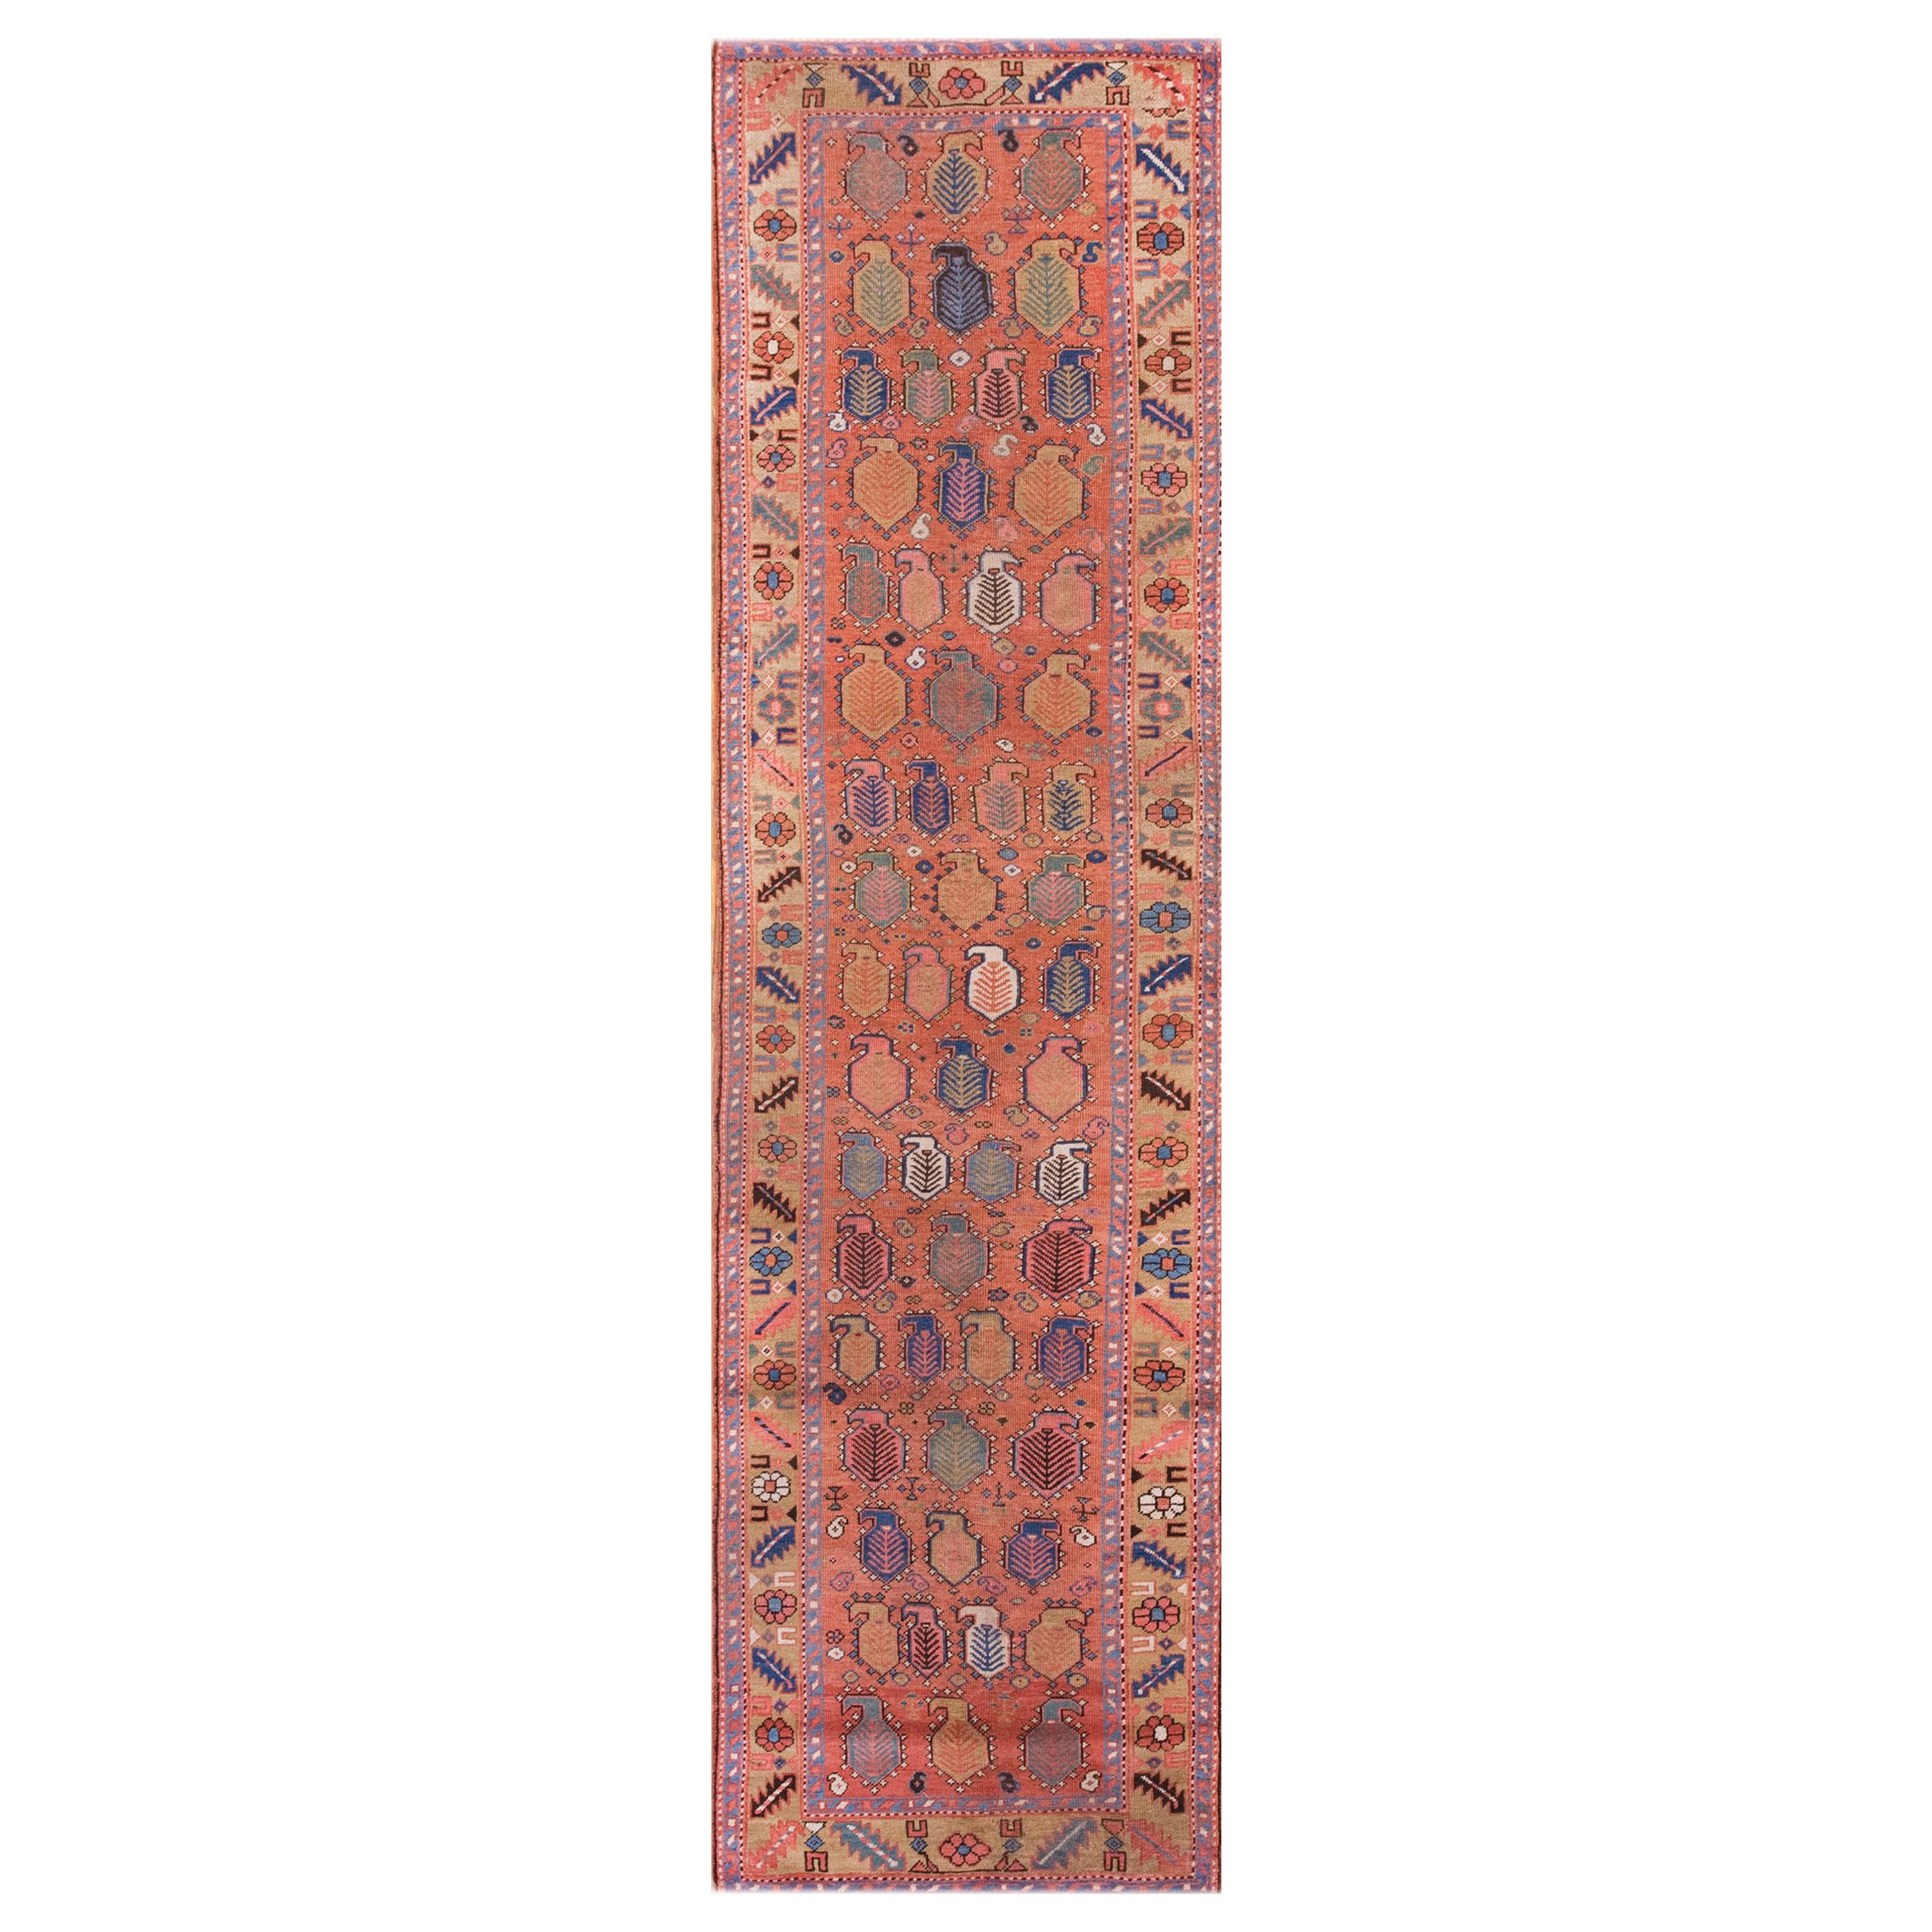 19th Century N.W. Persian Bakshaiesh Carpet ( 3'4" x 12'6" - 102  x  380 ) For Sale